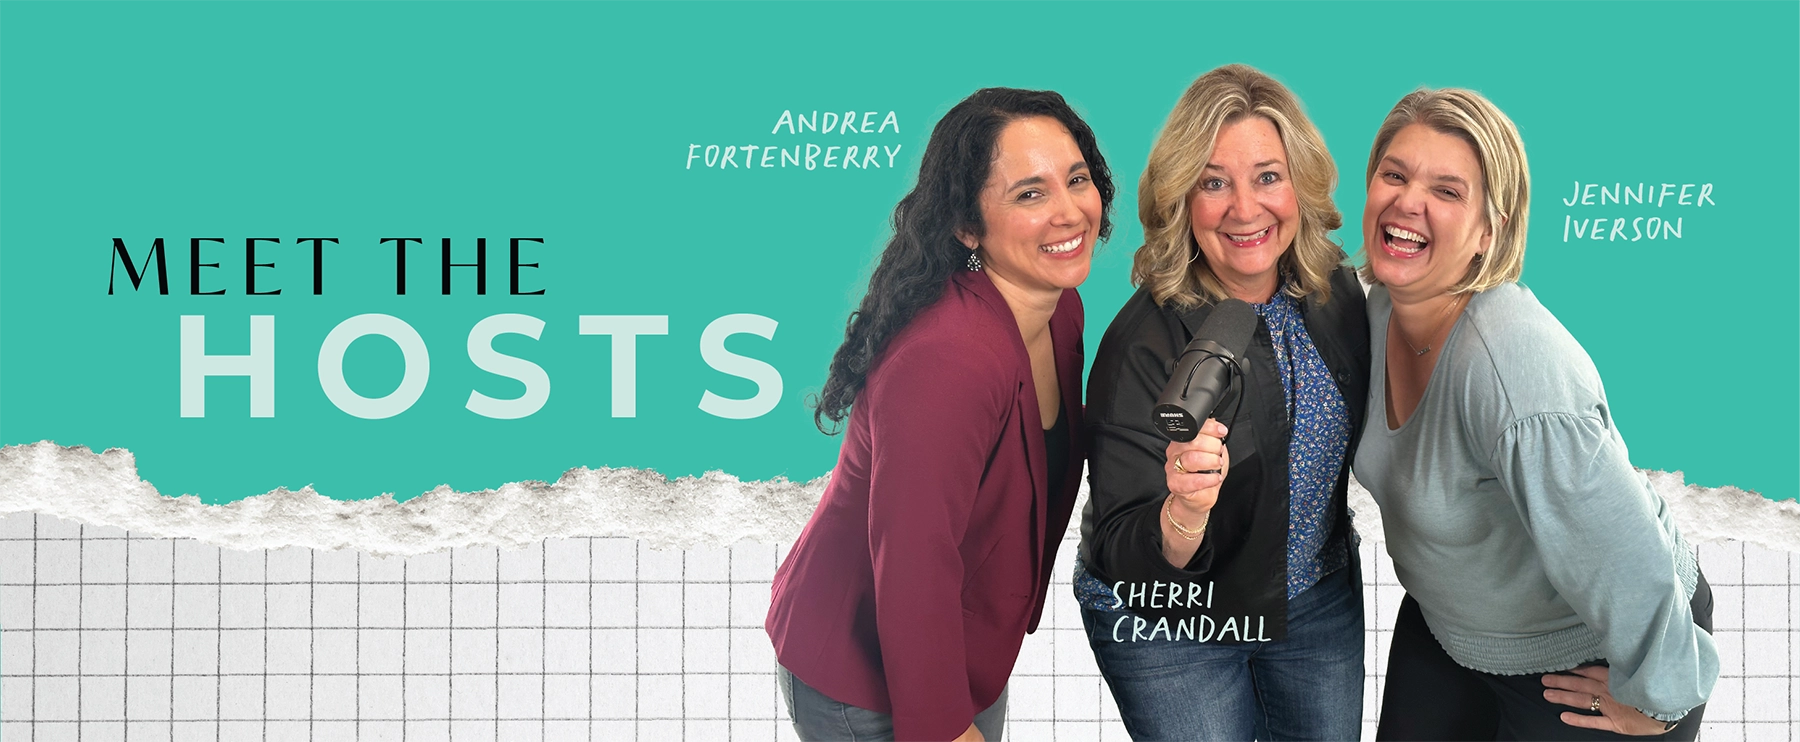 The MomCo leader podcast hosts: Andrea Fortenberry, Sherri Crandall and Jennifer Iverson.